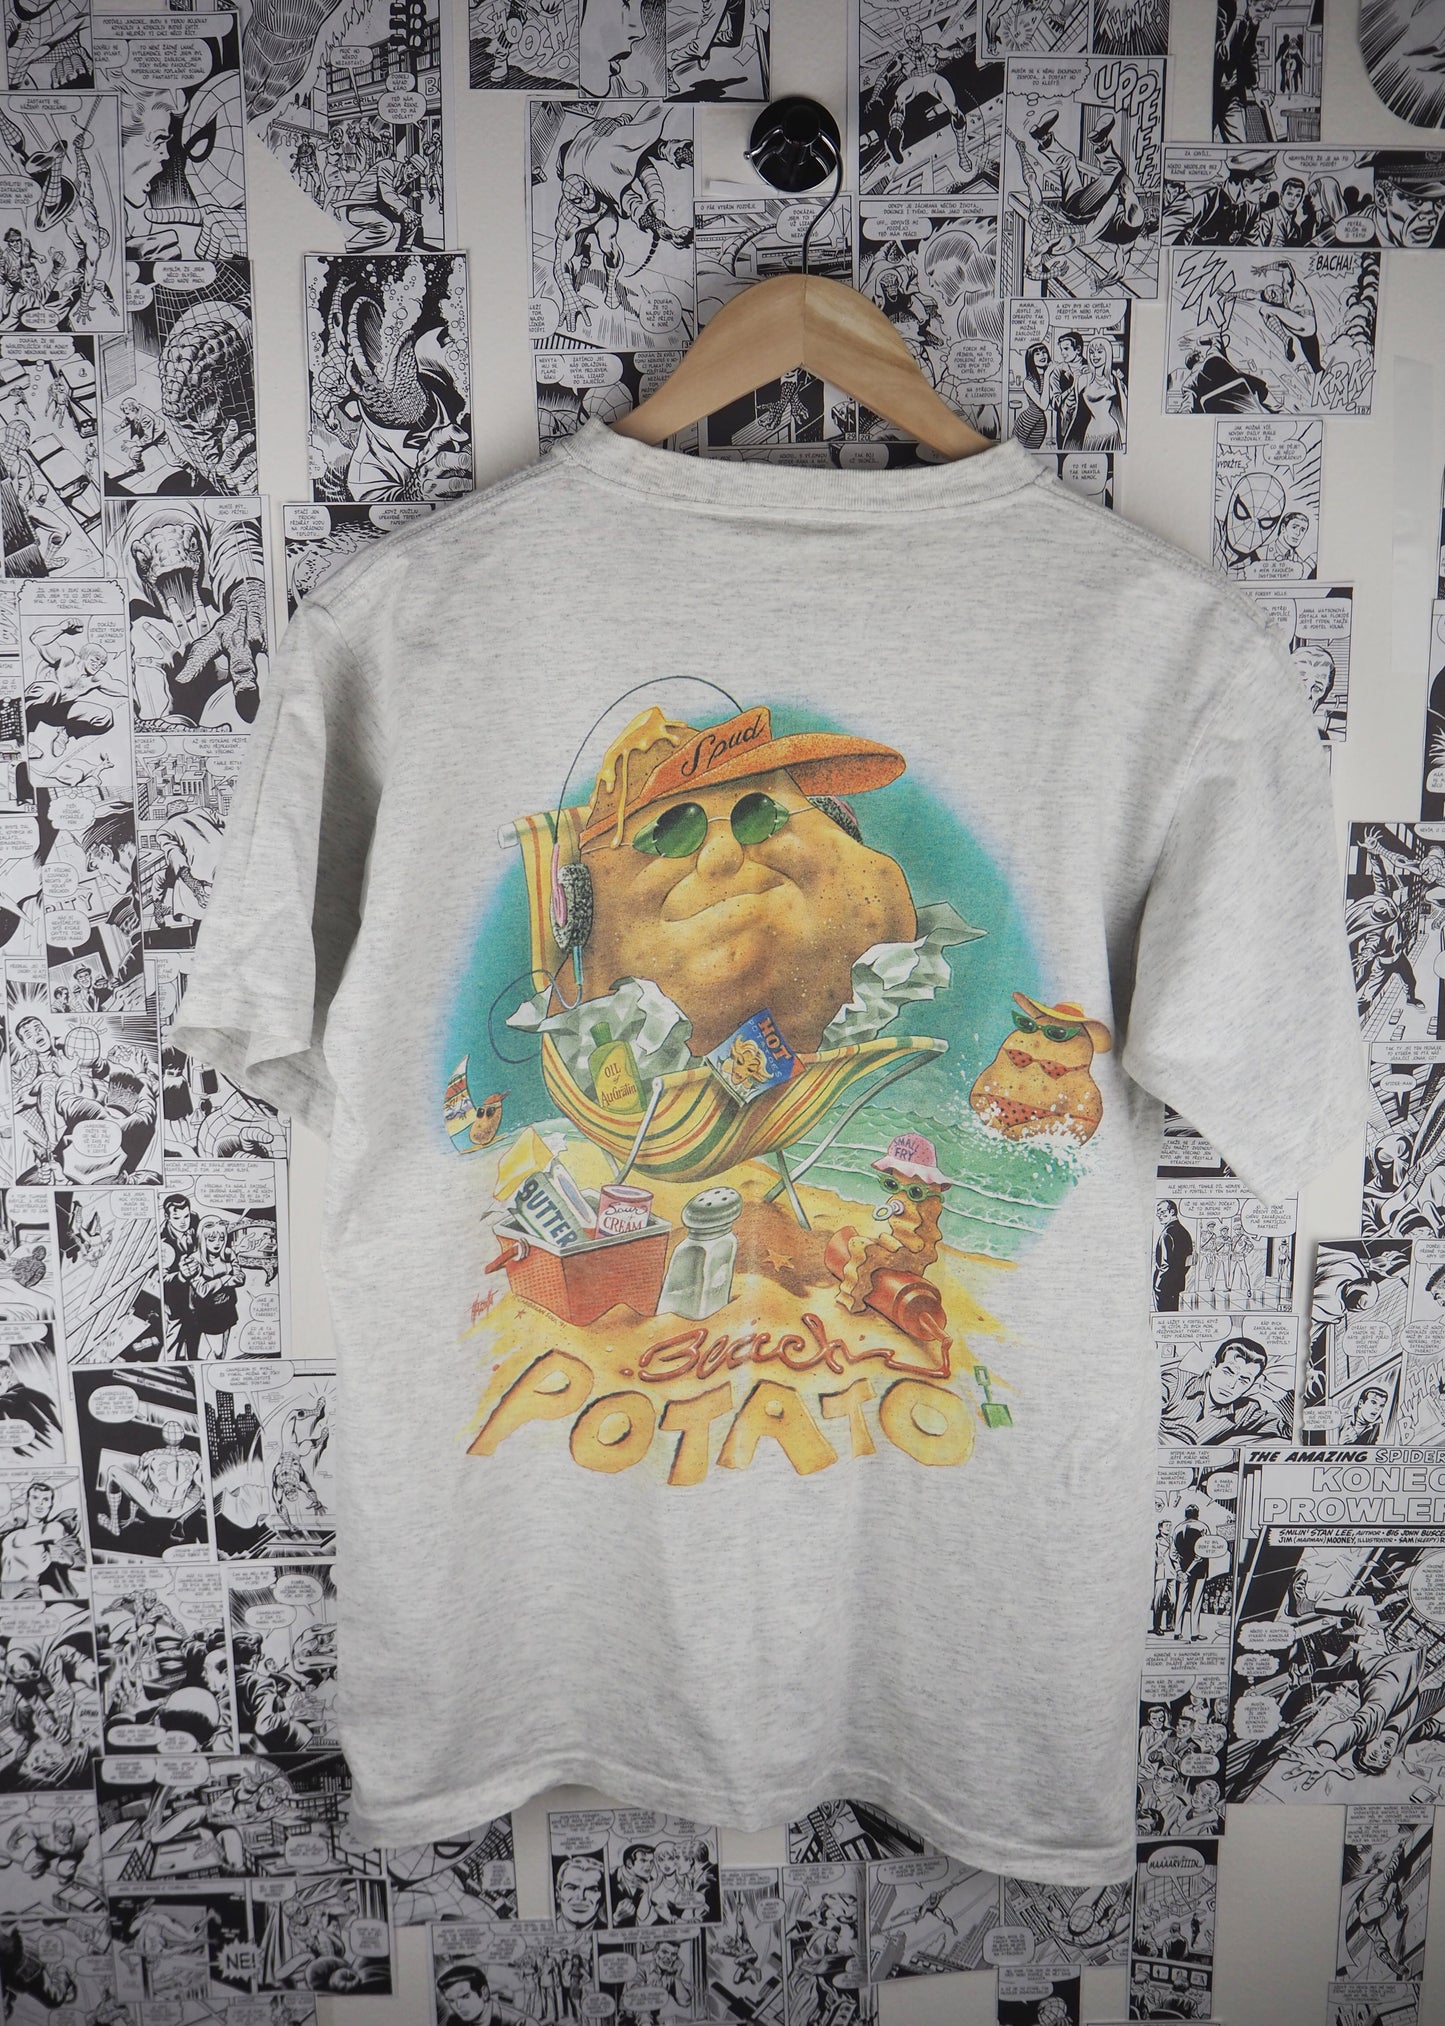 Vintage "Beach Potato" 90s t-shirt - size L